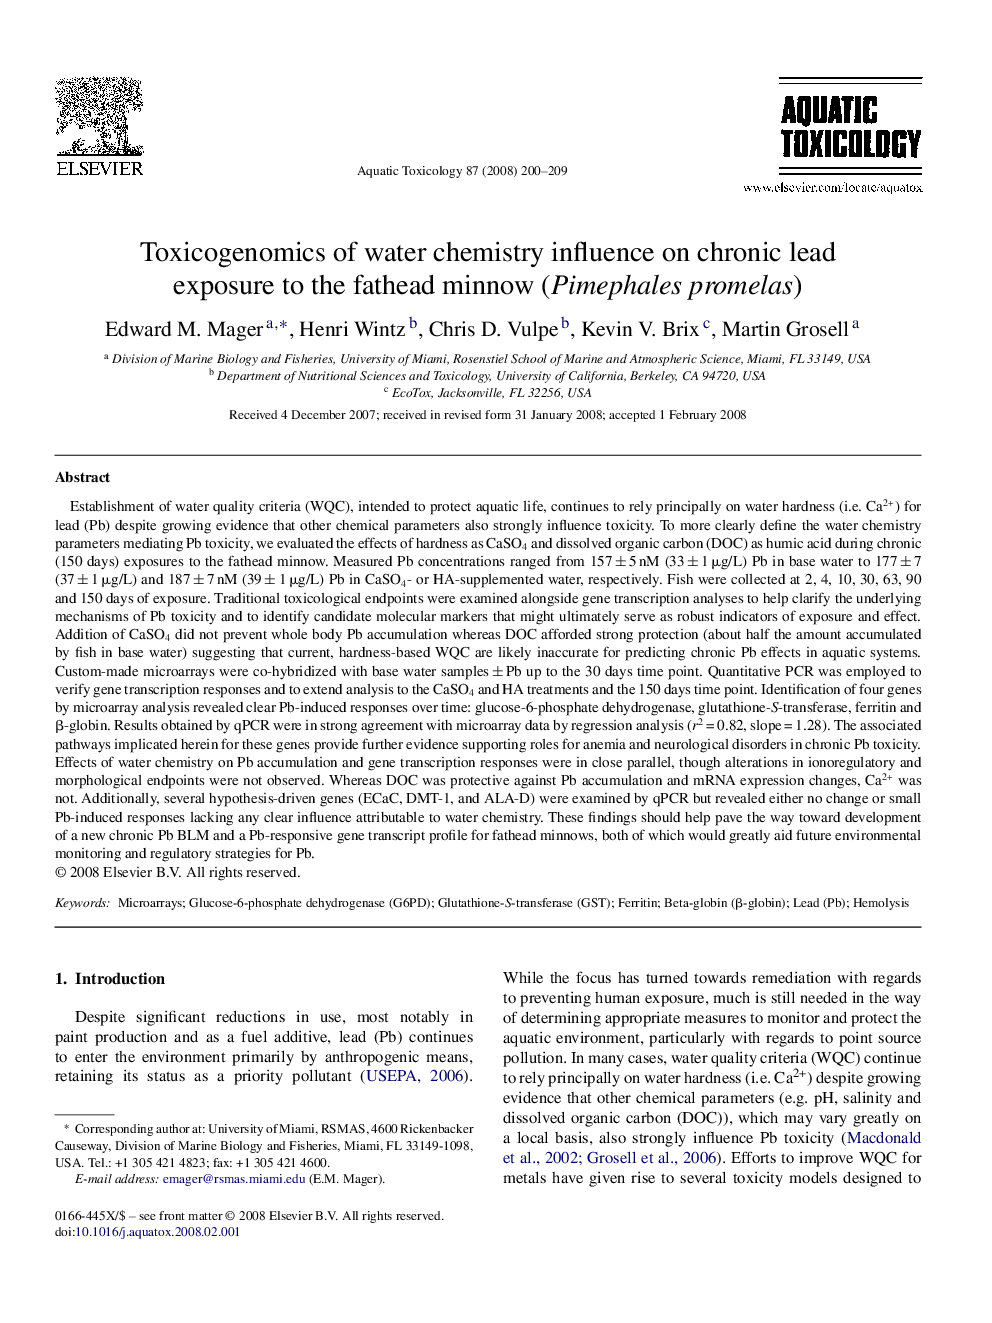 Toxicogenomics of water chemistry influence on chronic lead exposure to the fathead minnow (Pimephales promelas)